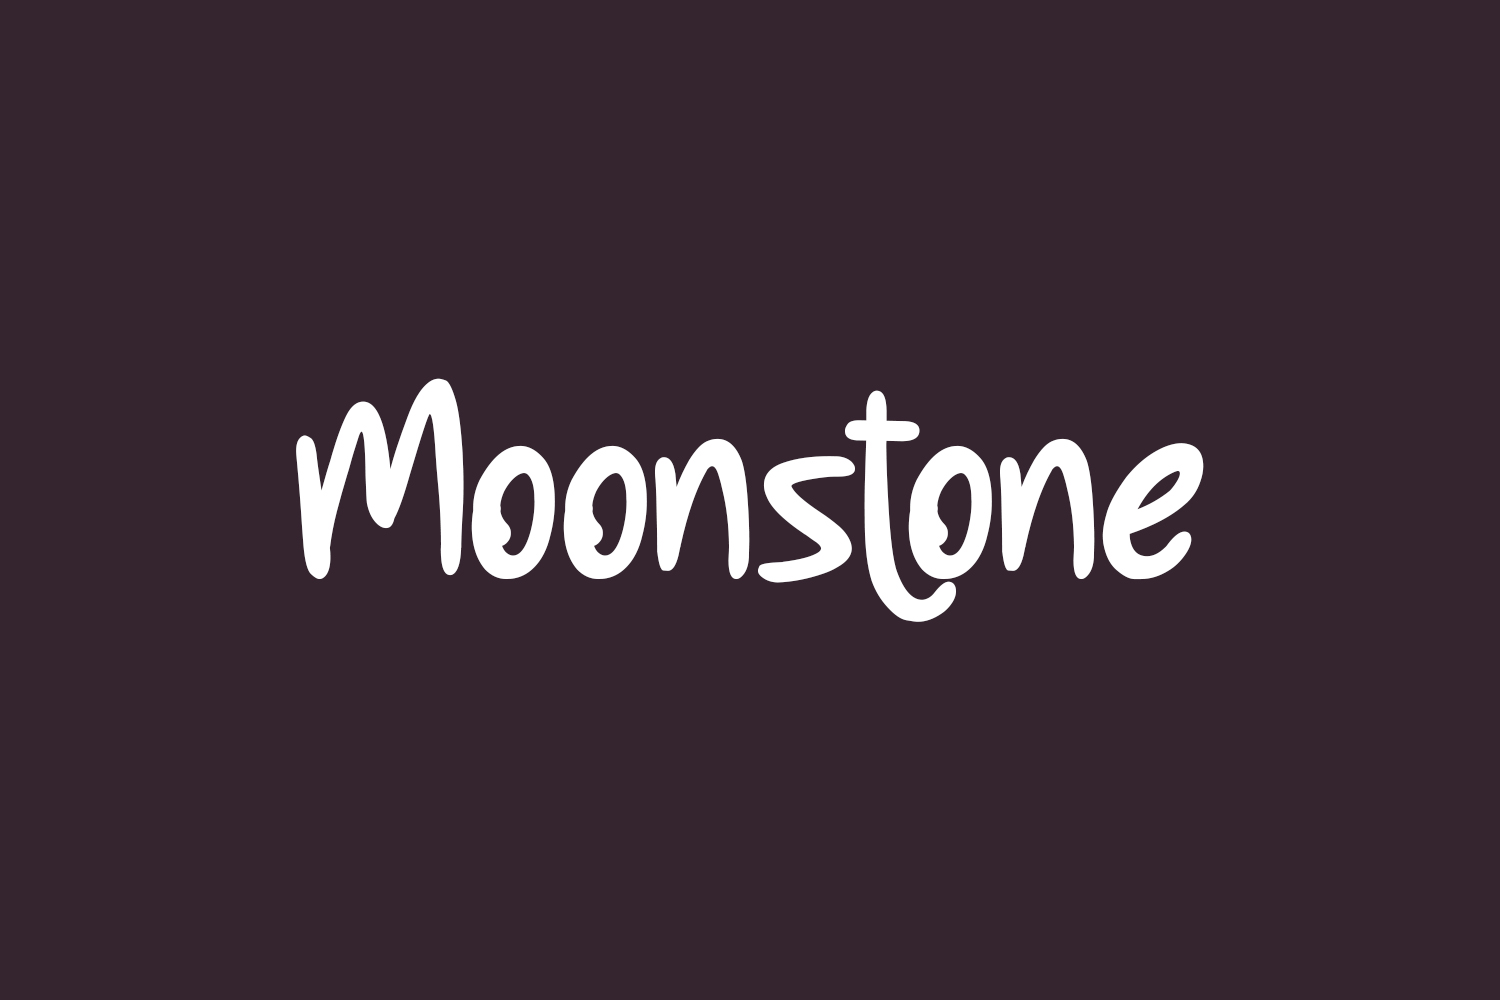 Moonstone Free Font